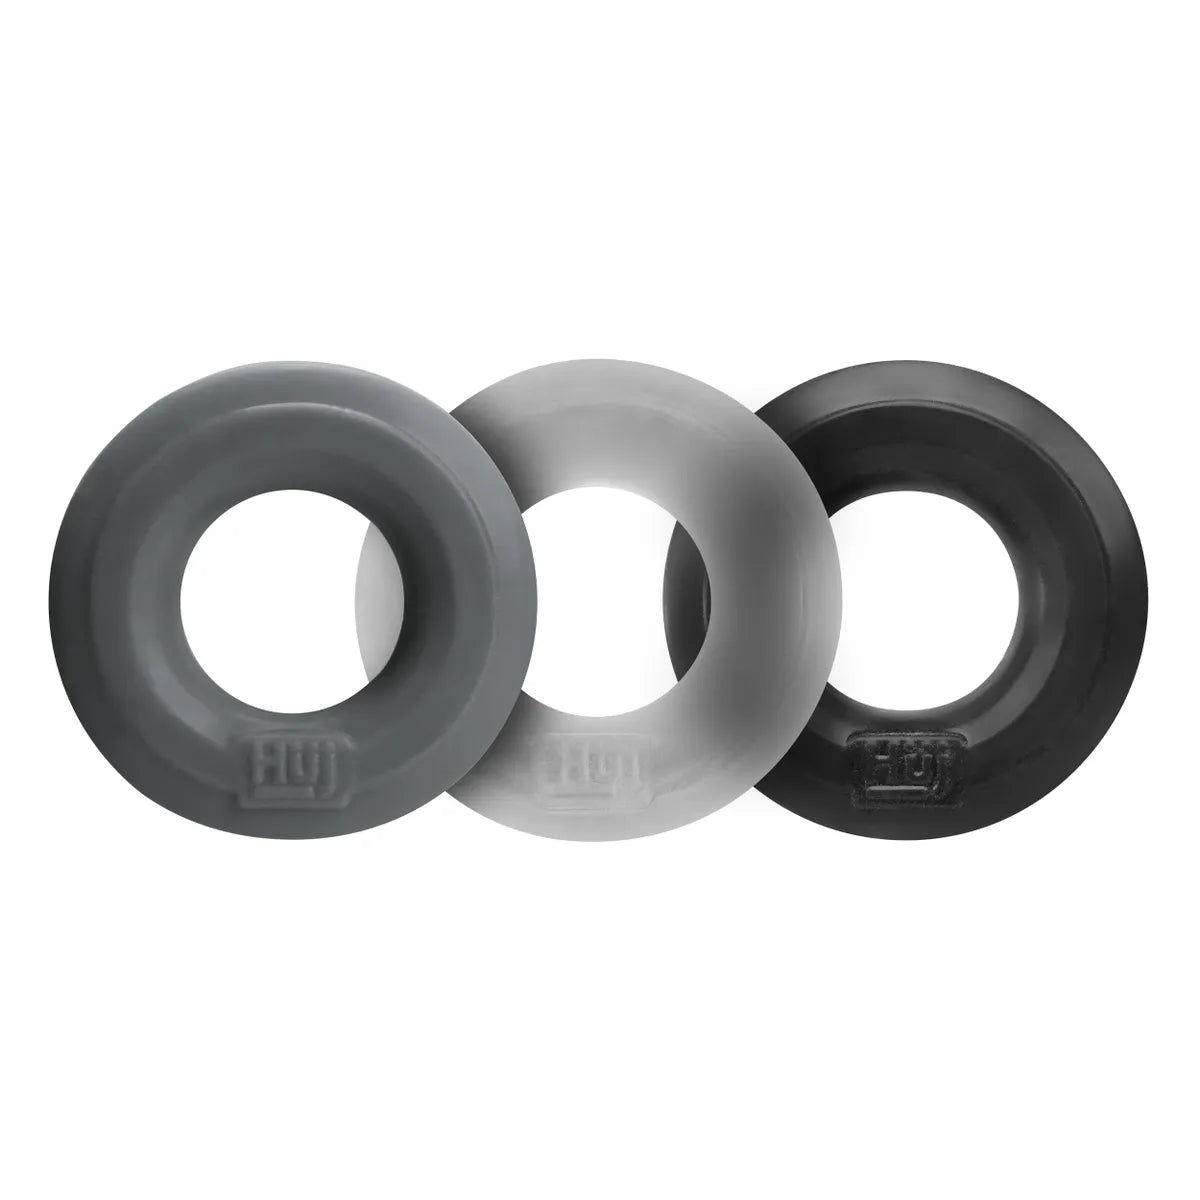 HUJ c-ring 3-pack tar/clear/grey